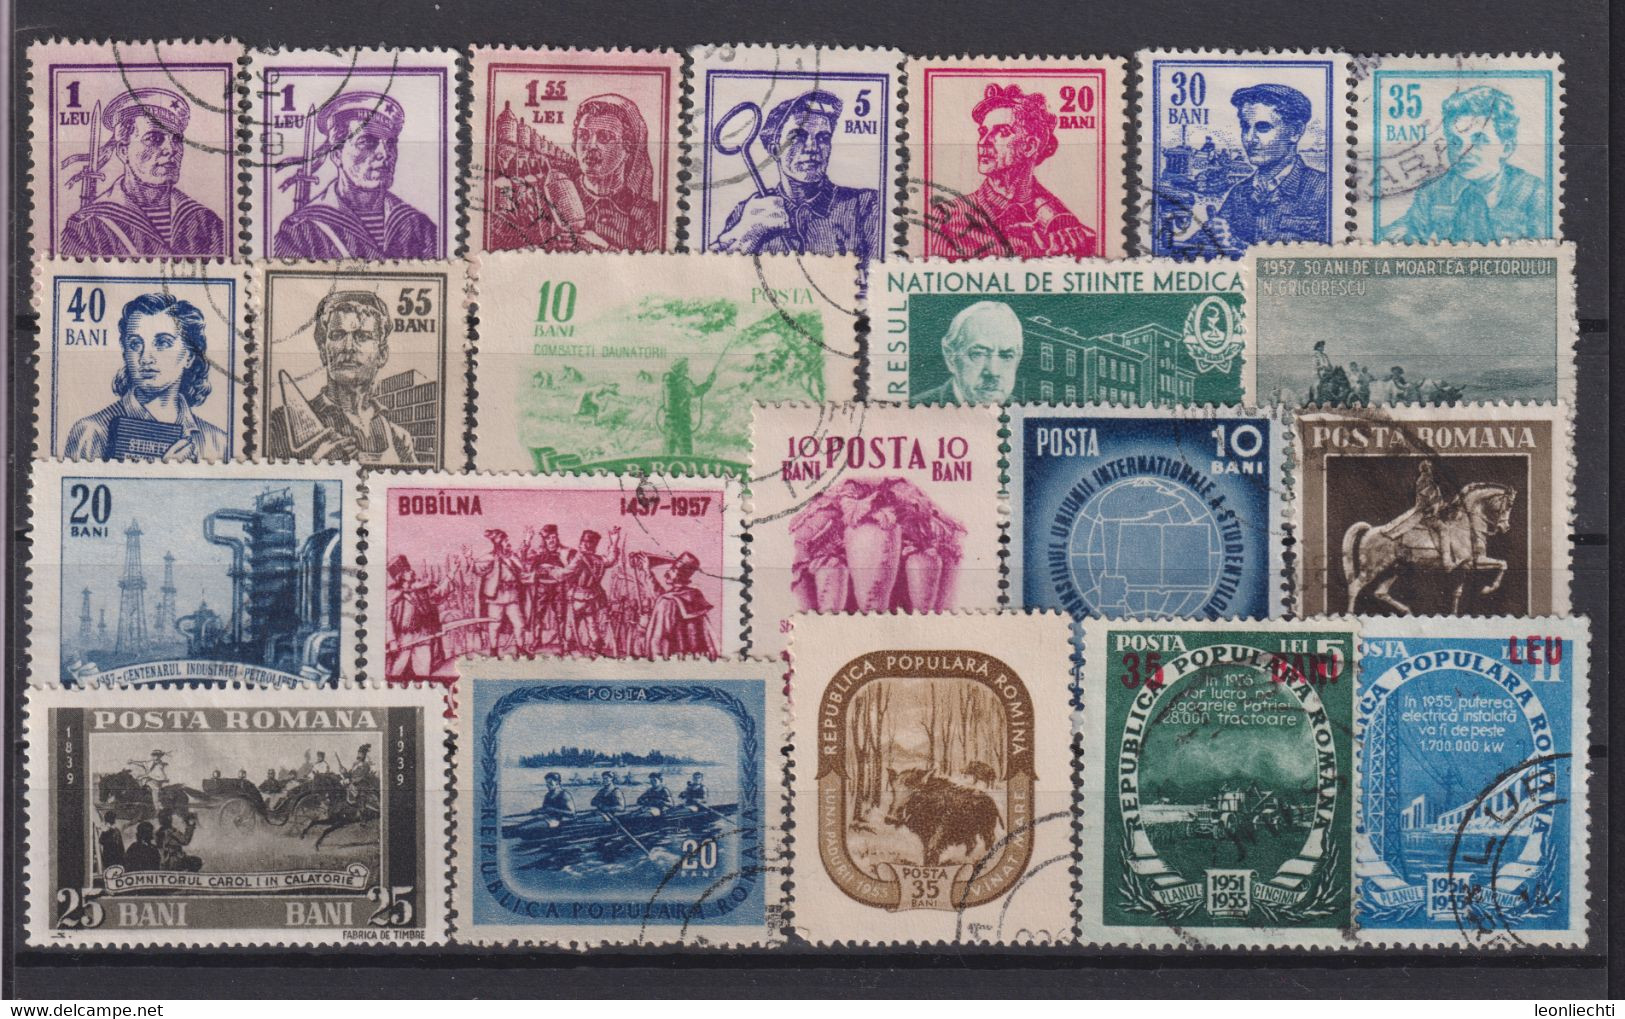 Rumänien Lot °  Briefmarken Gestempelt /  Stamps Stamped /  Timbres Oblitérés - Collections